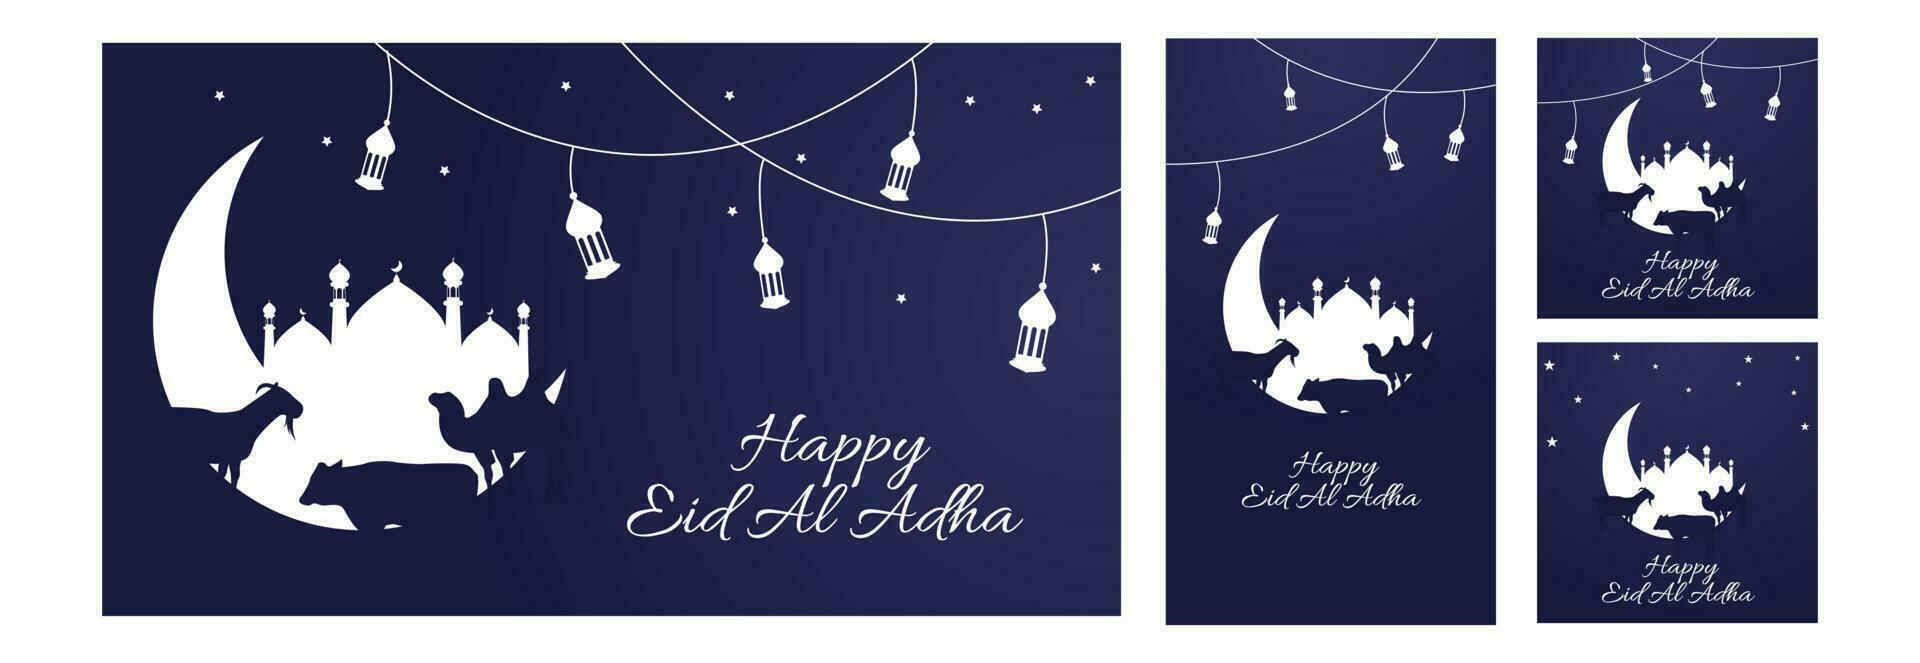 eid al adha greeting card for social media post vector